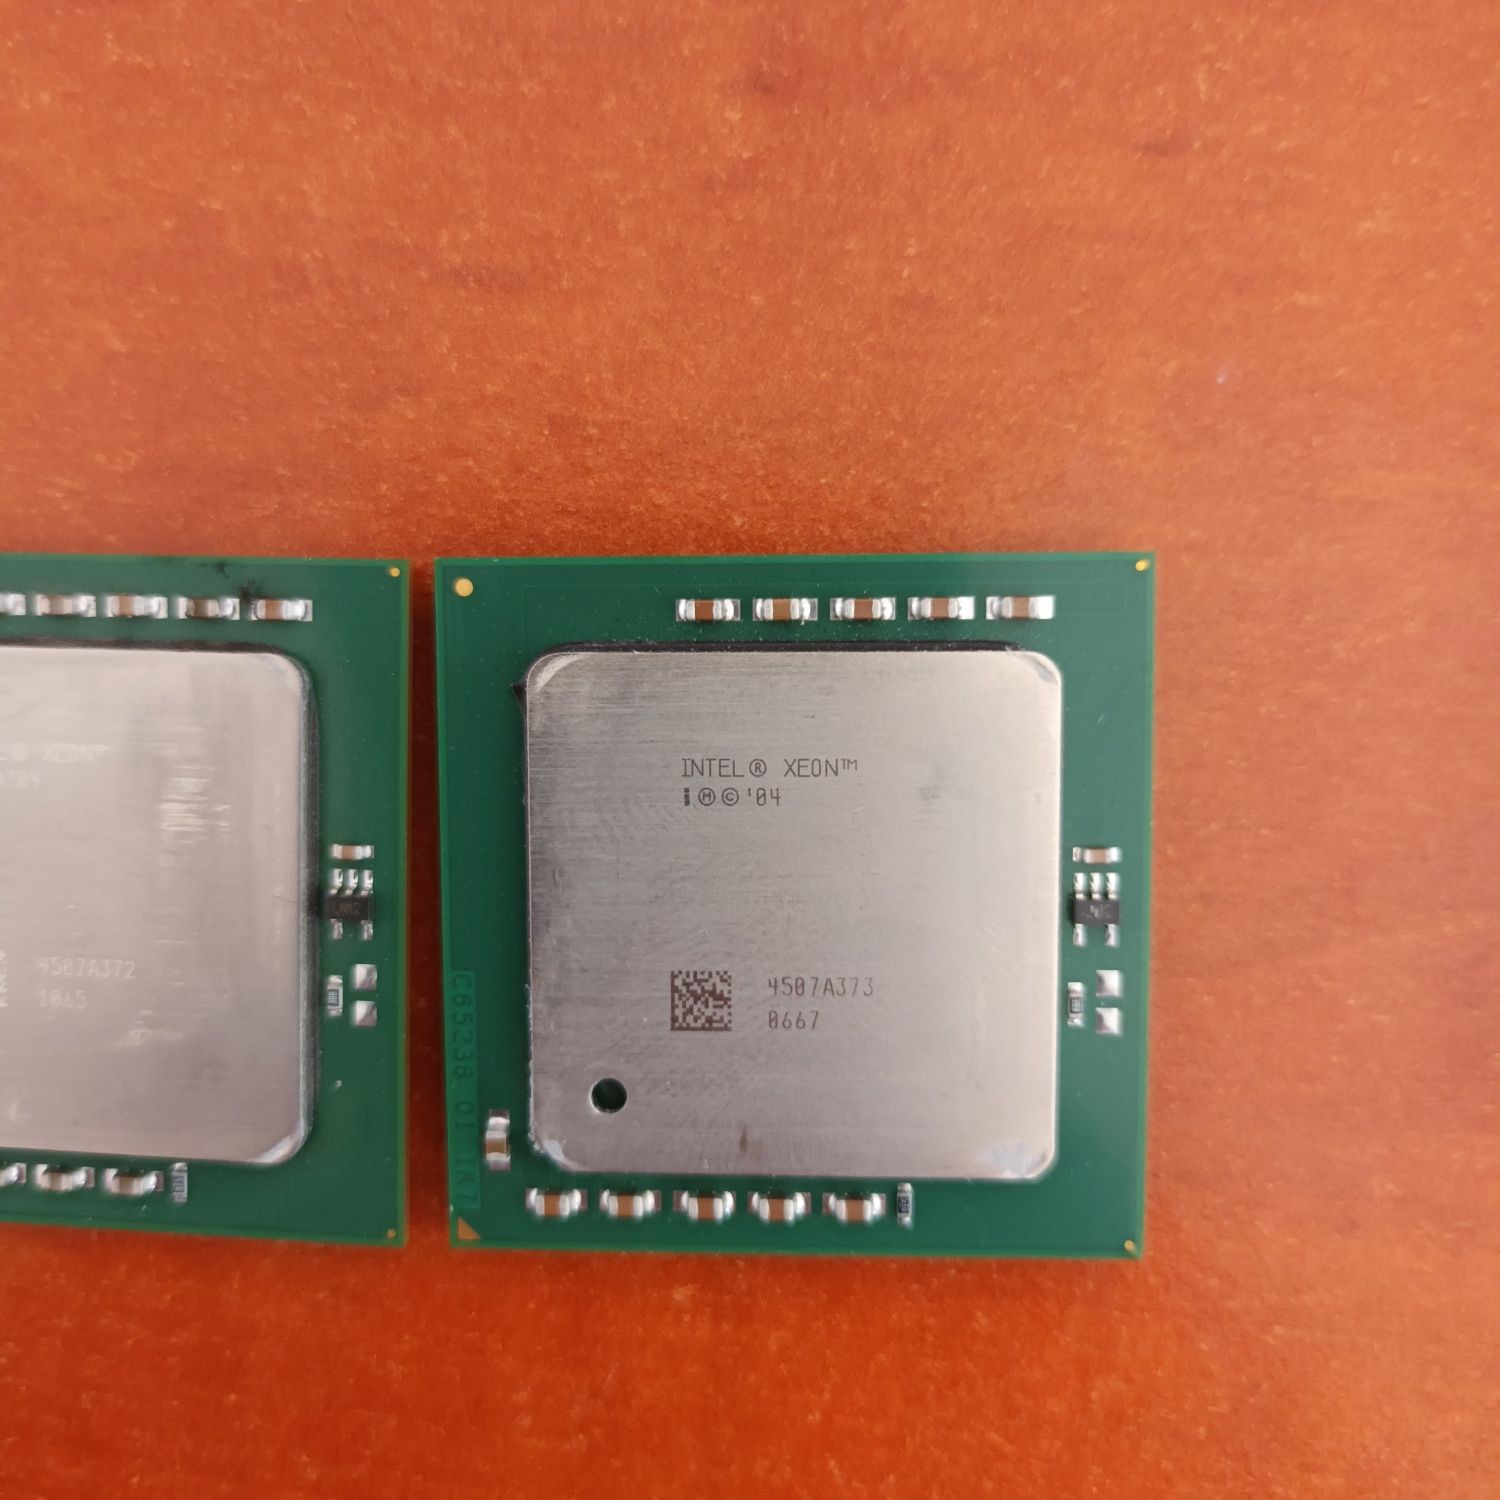 procesor AMD Opteron 2216 + 2 procesoare Xeon 3200 DP